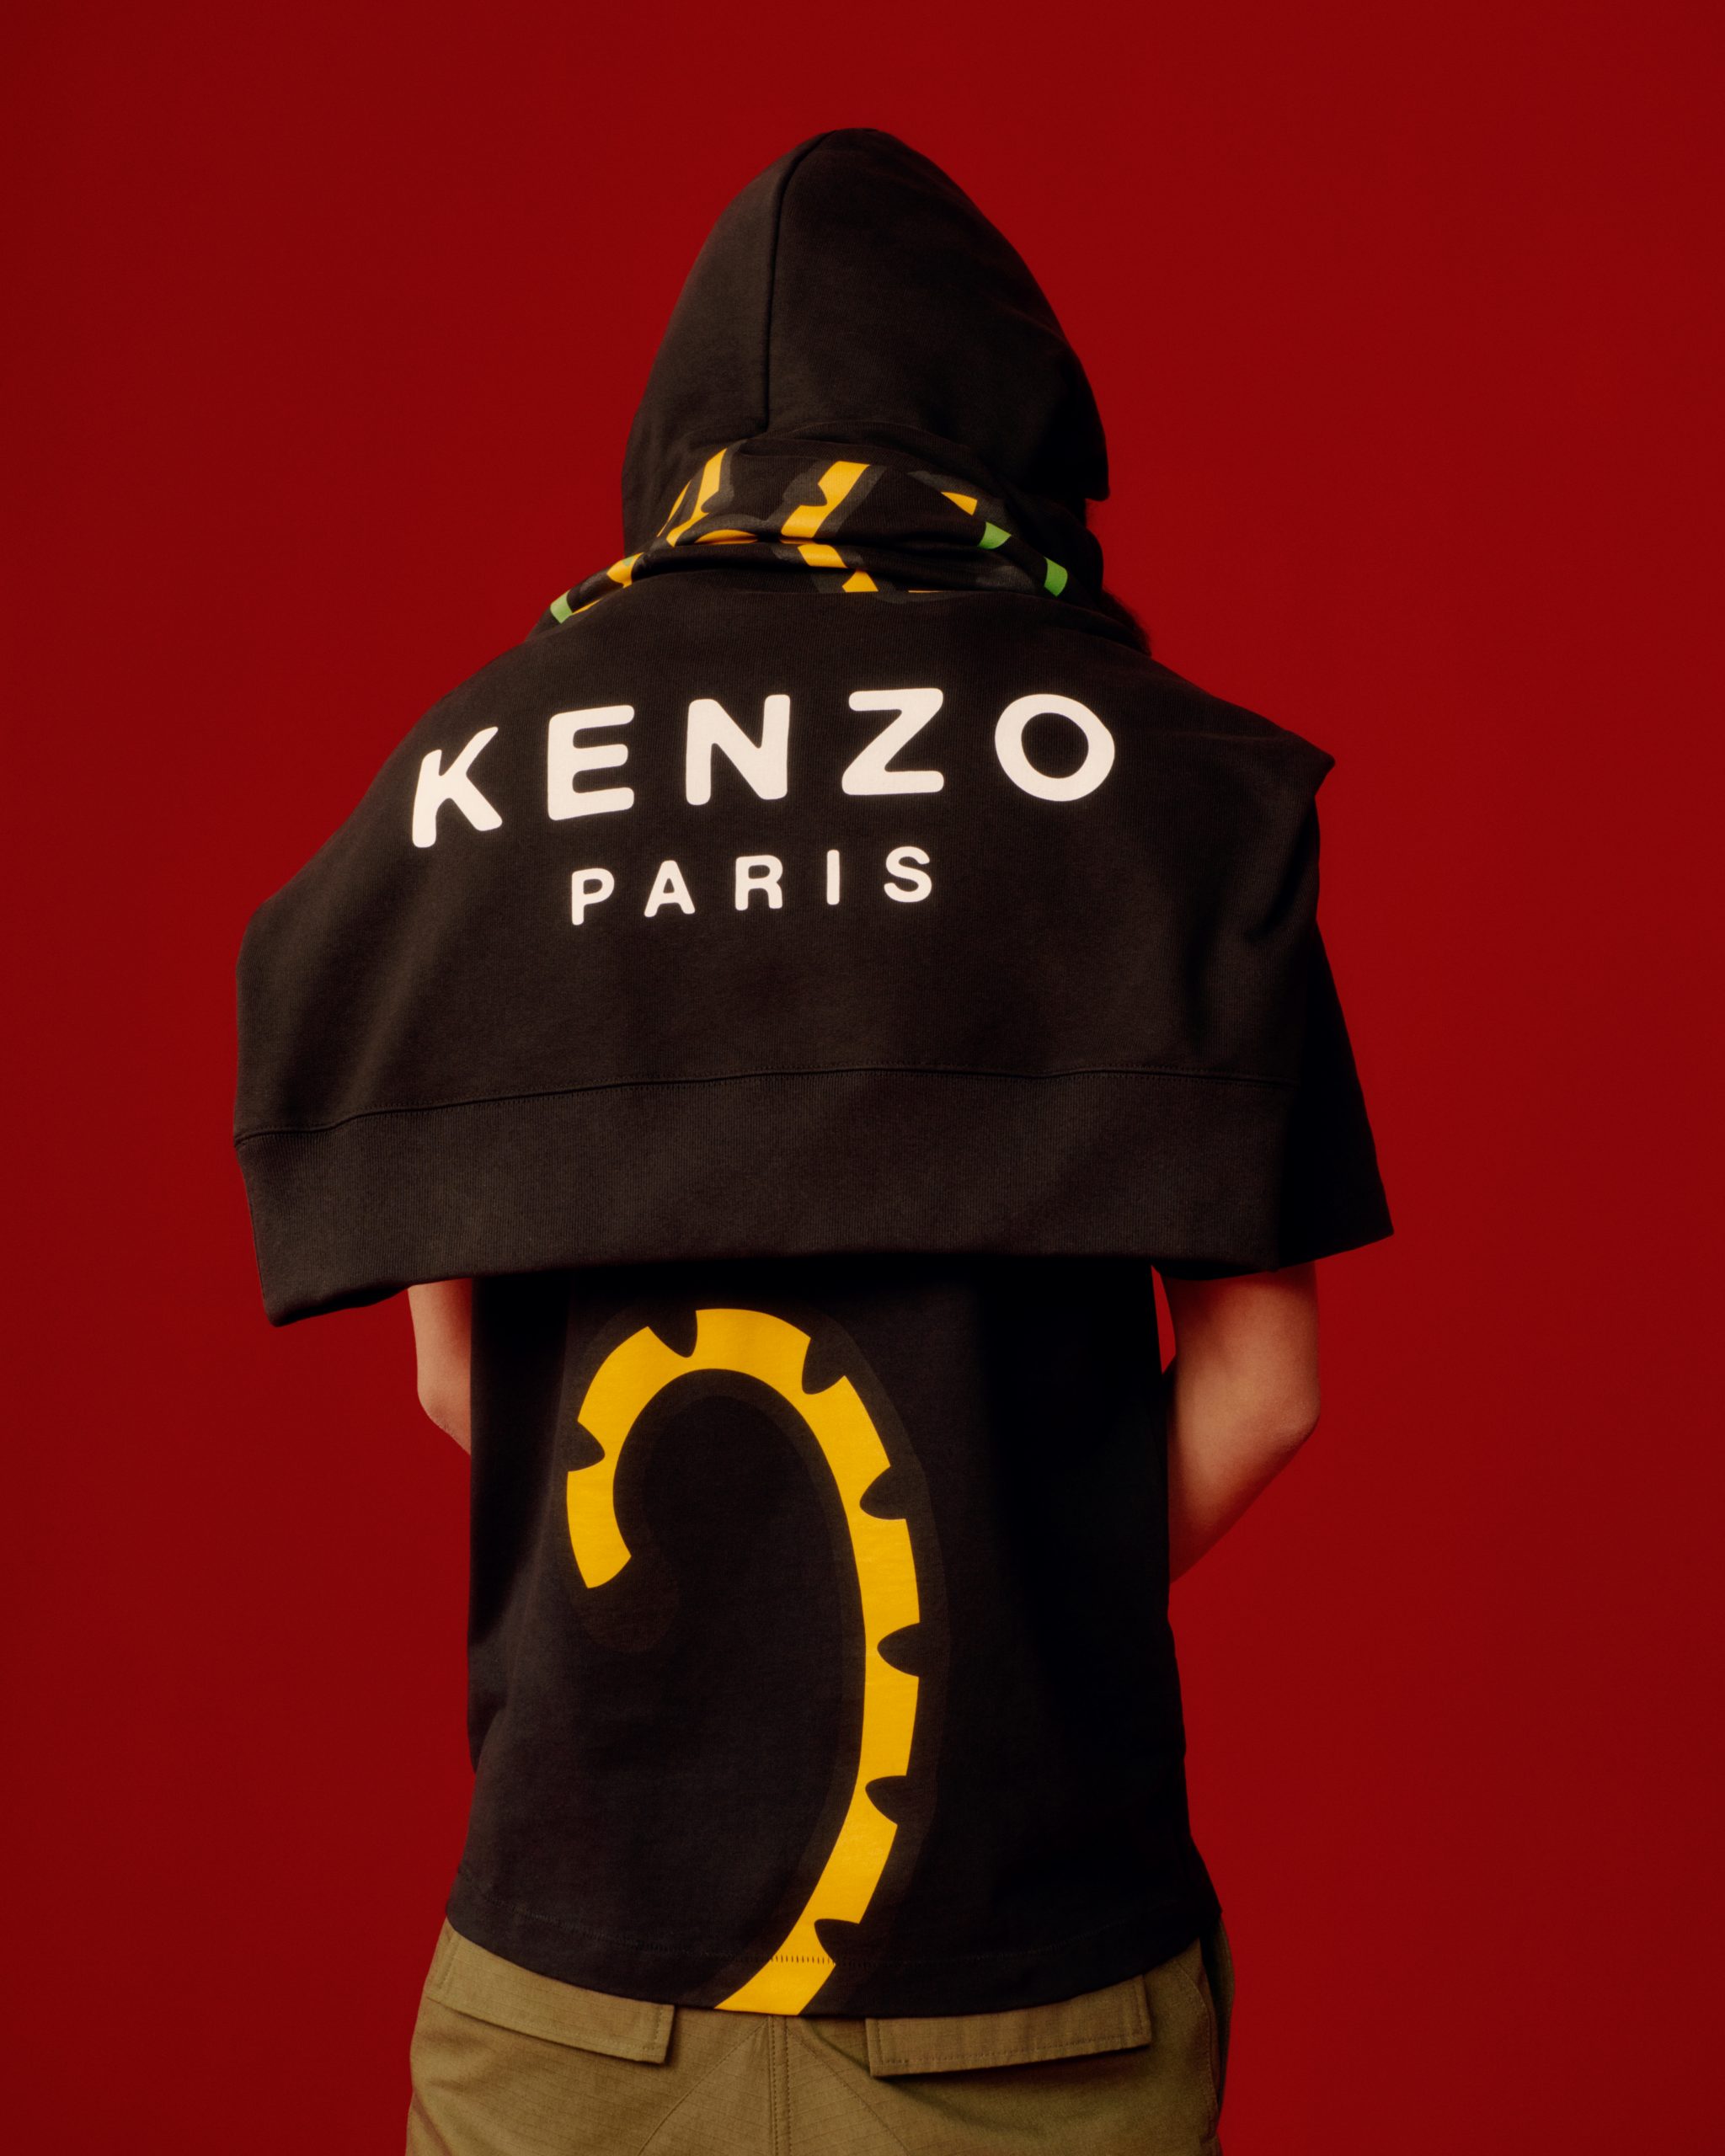 Nigo is the new Artistic Director of Kenzo